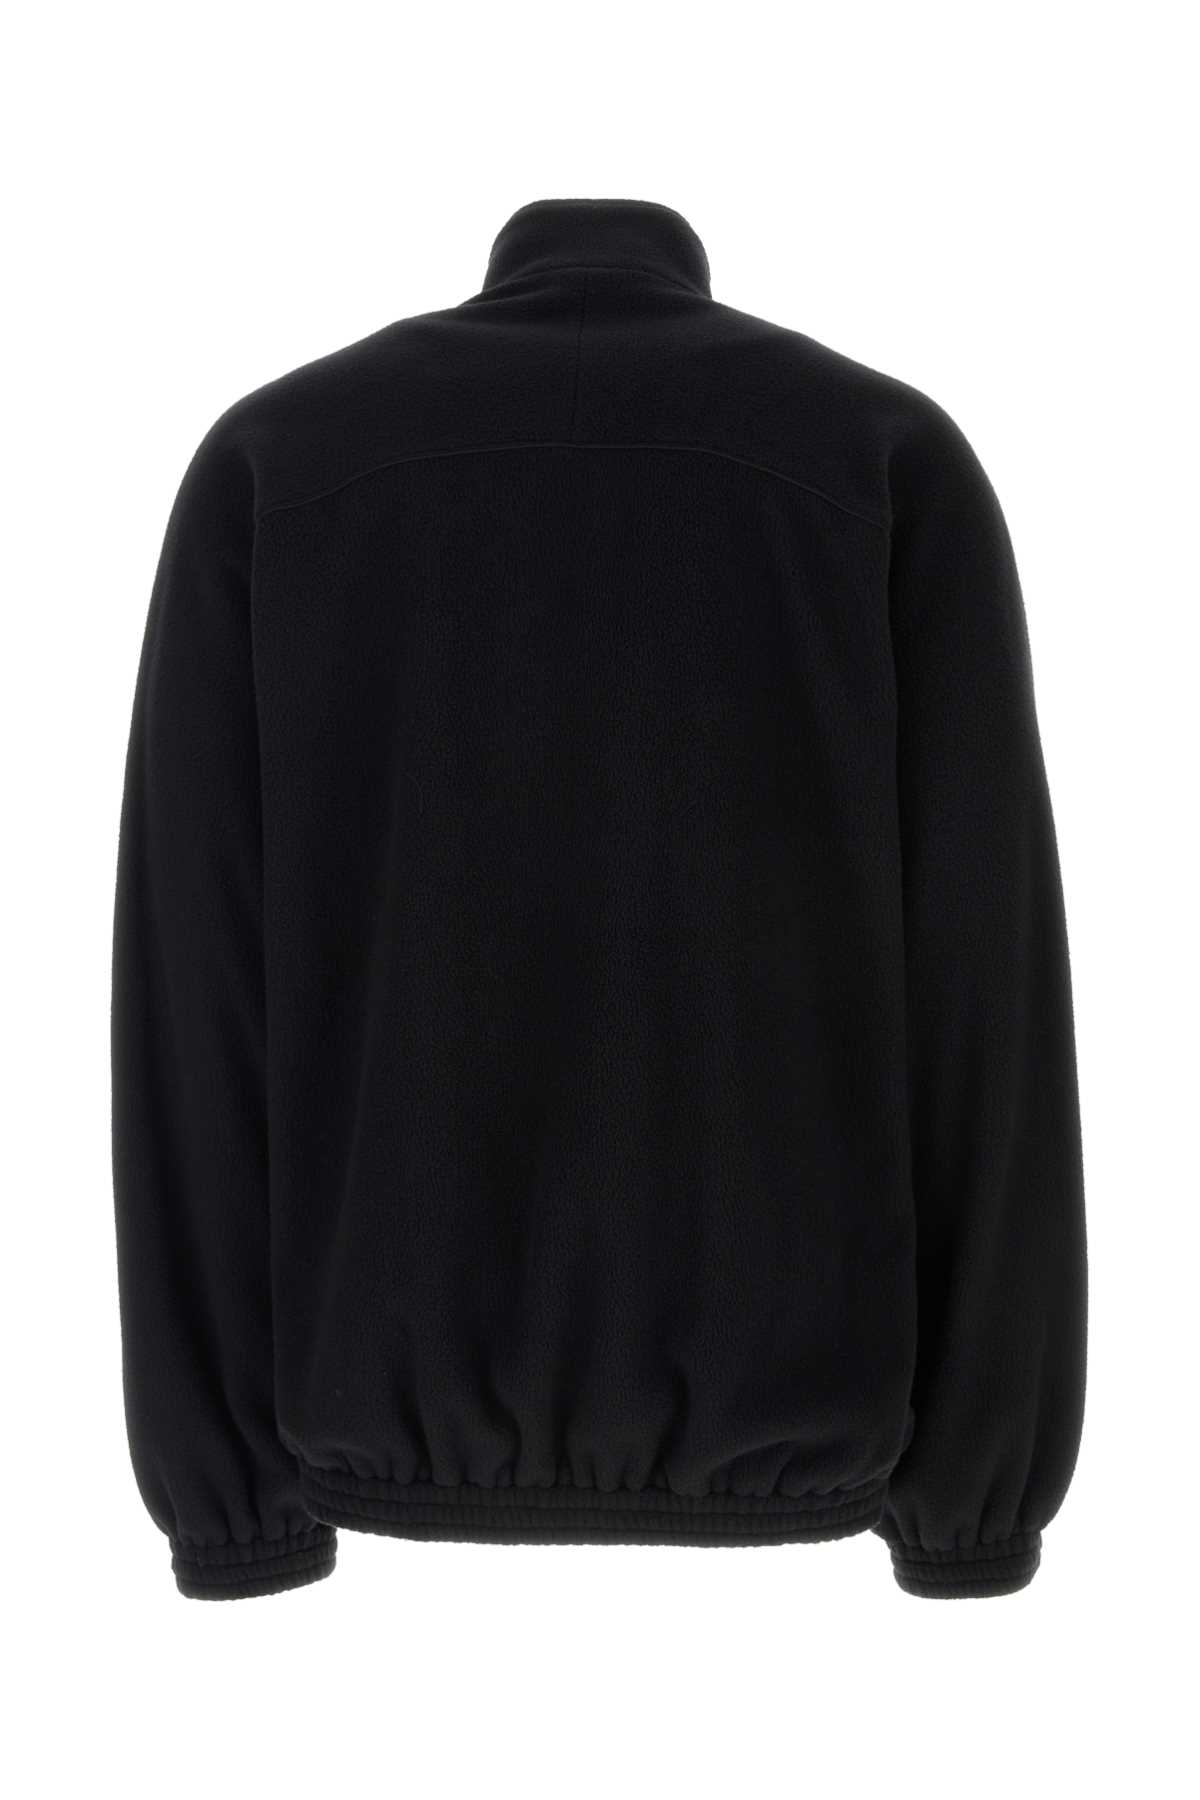 Balenciaga Black Pile Oversize Sweatshirt In 1000